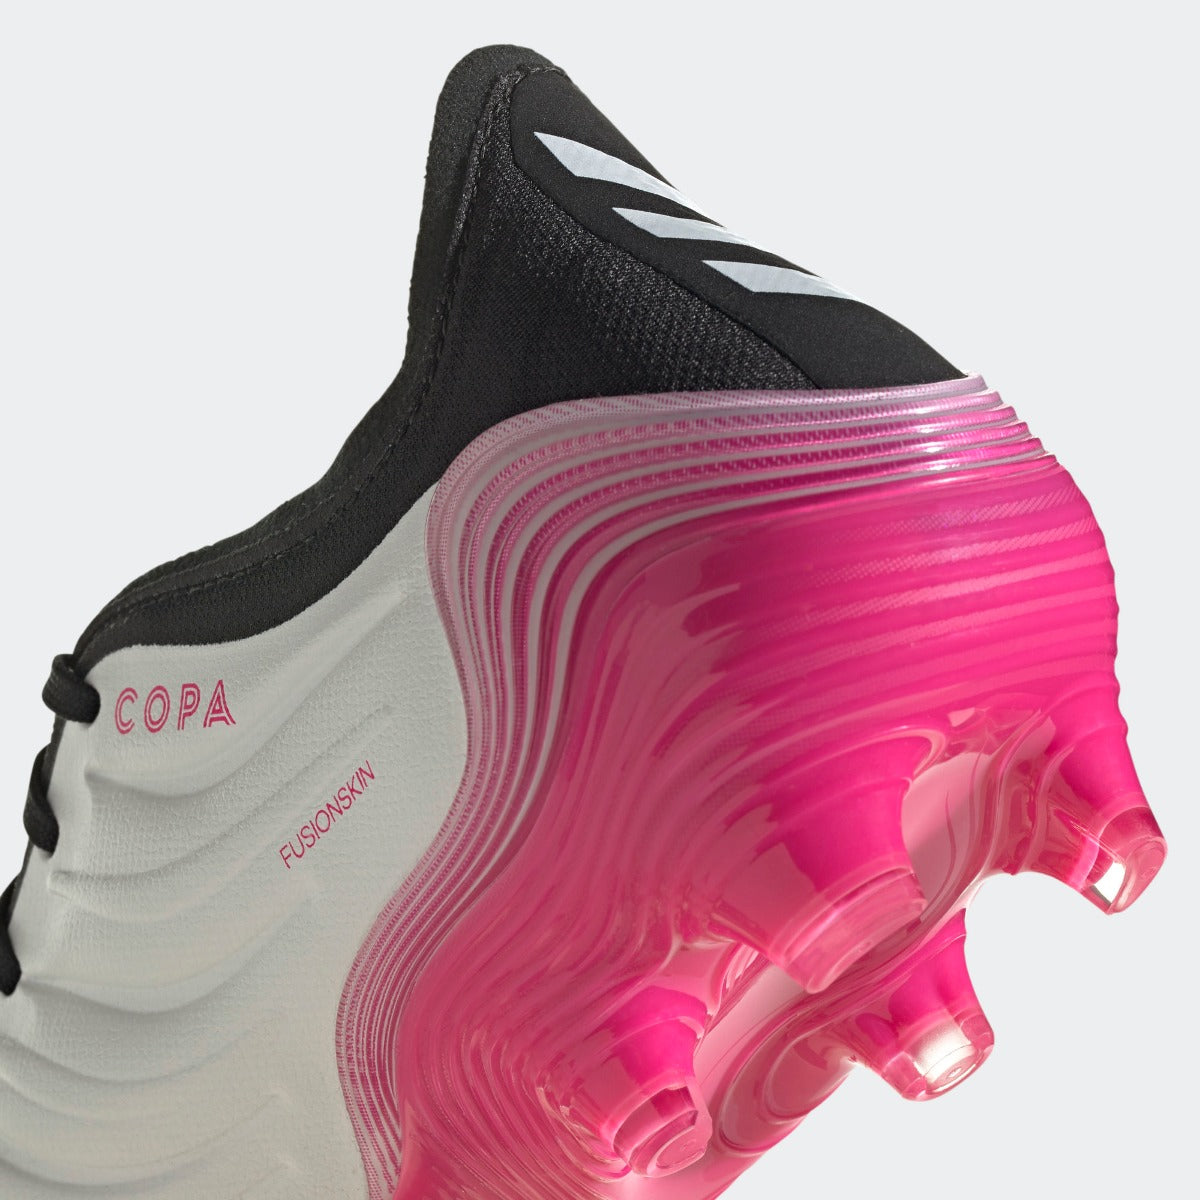 Adidas Copa Sense .1 FG - White-Black-Pink (Detail 2)